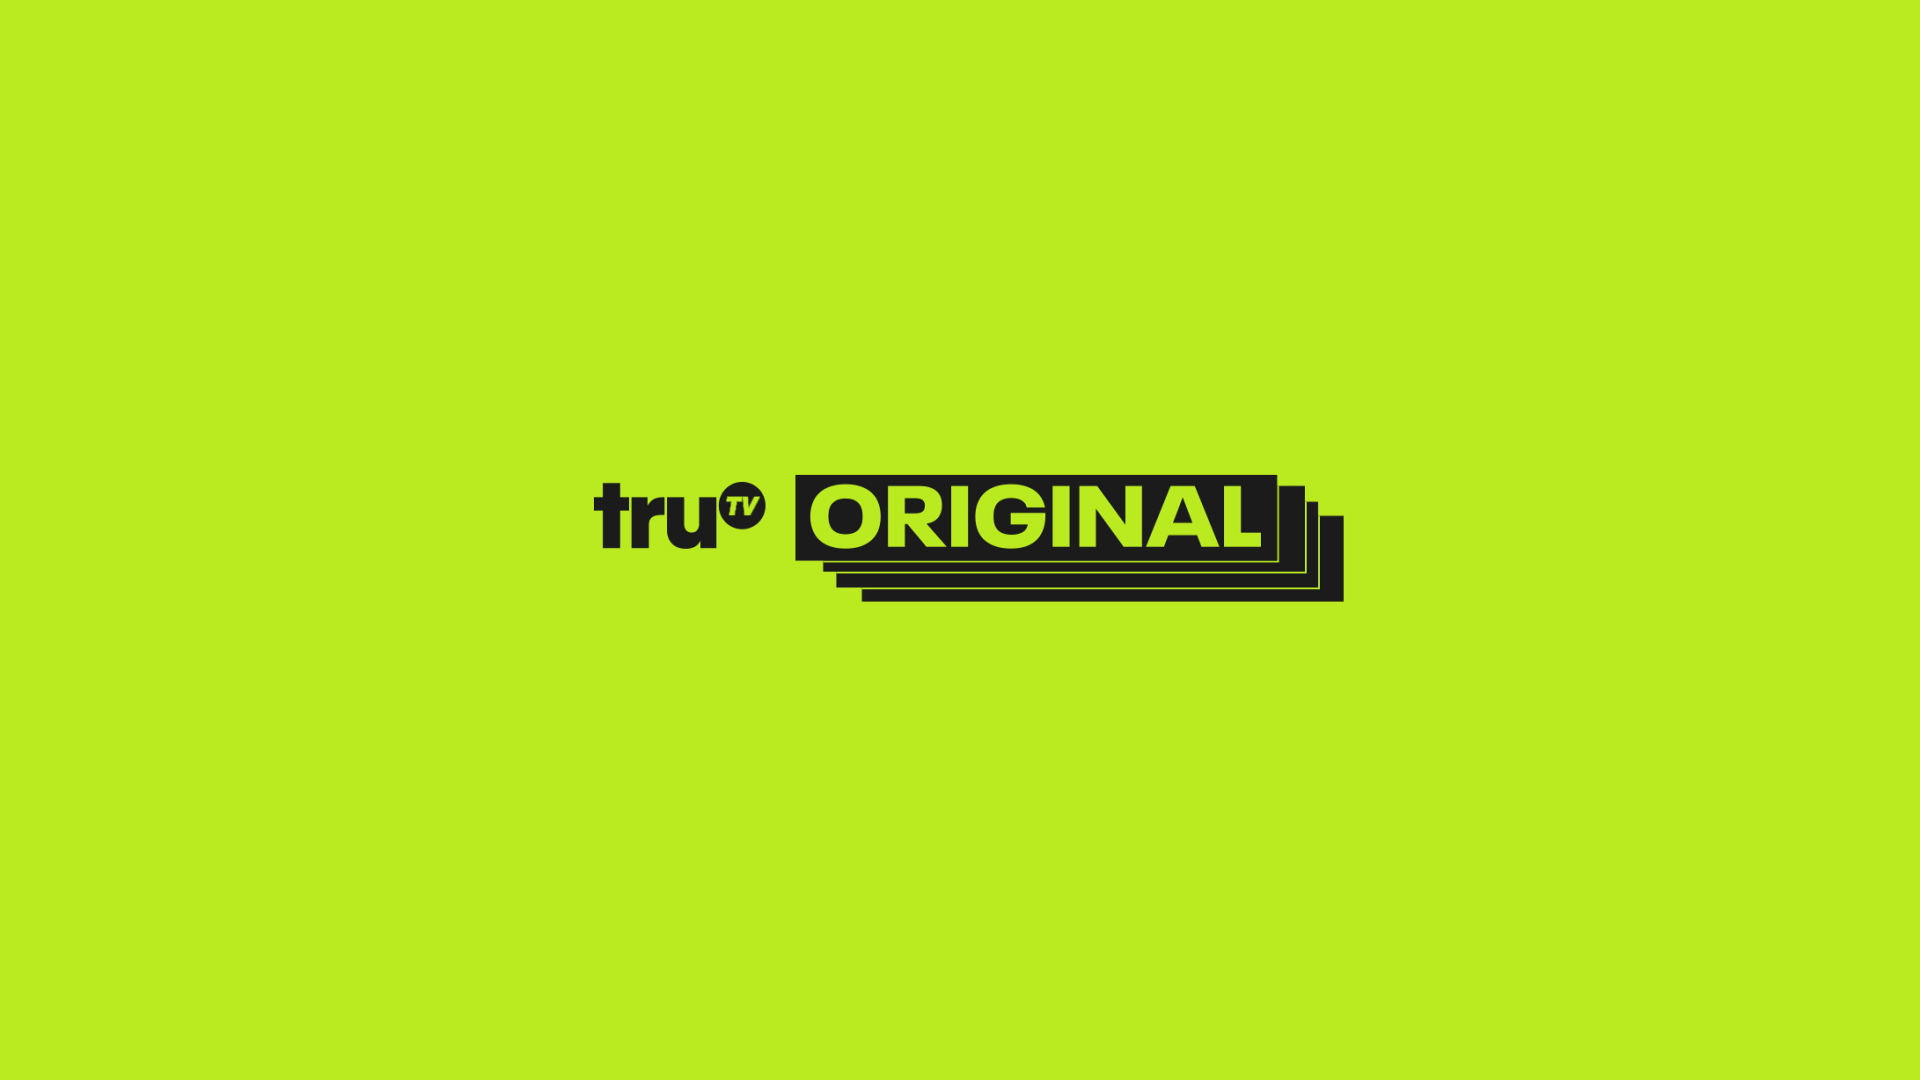 trutv_2020_network_rebrand-Original-0-00-13-11